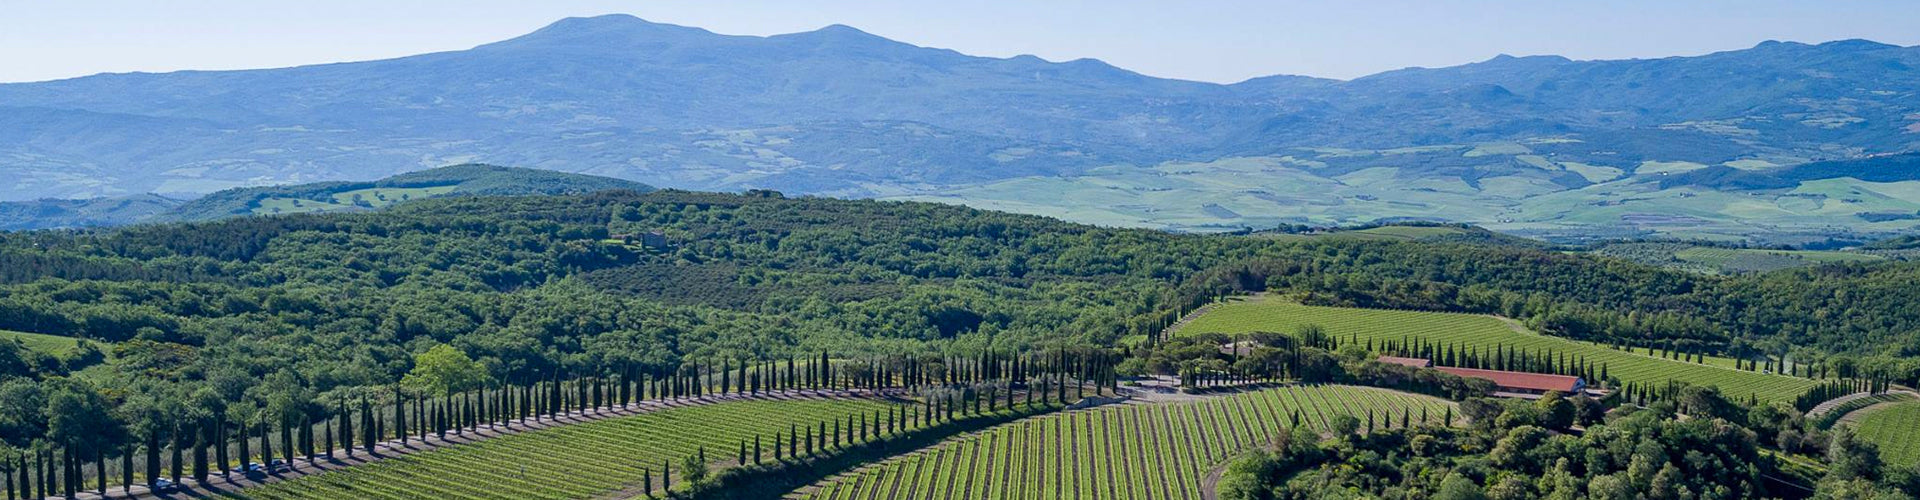 Poggio Antico Vineyards in Montalcino, Italy